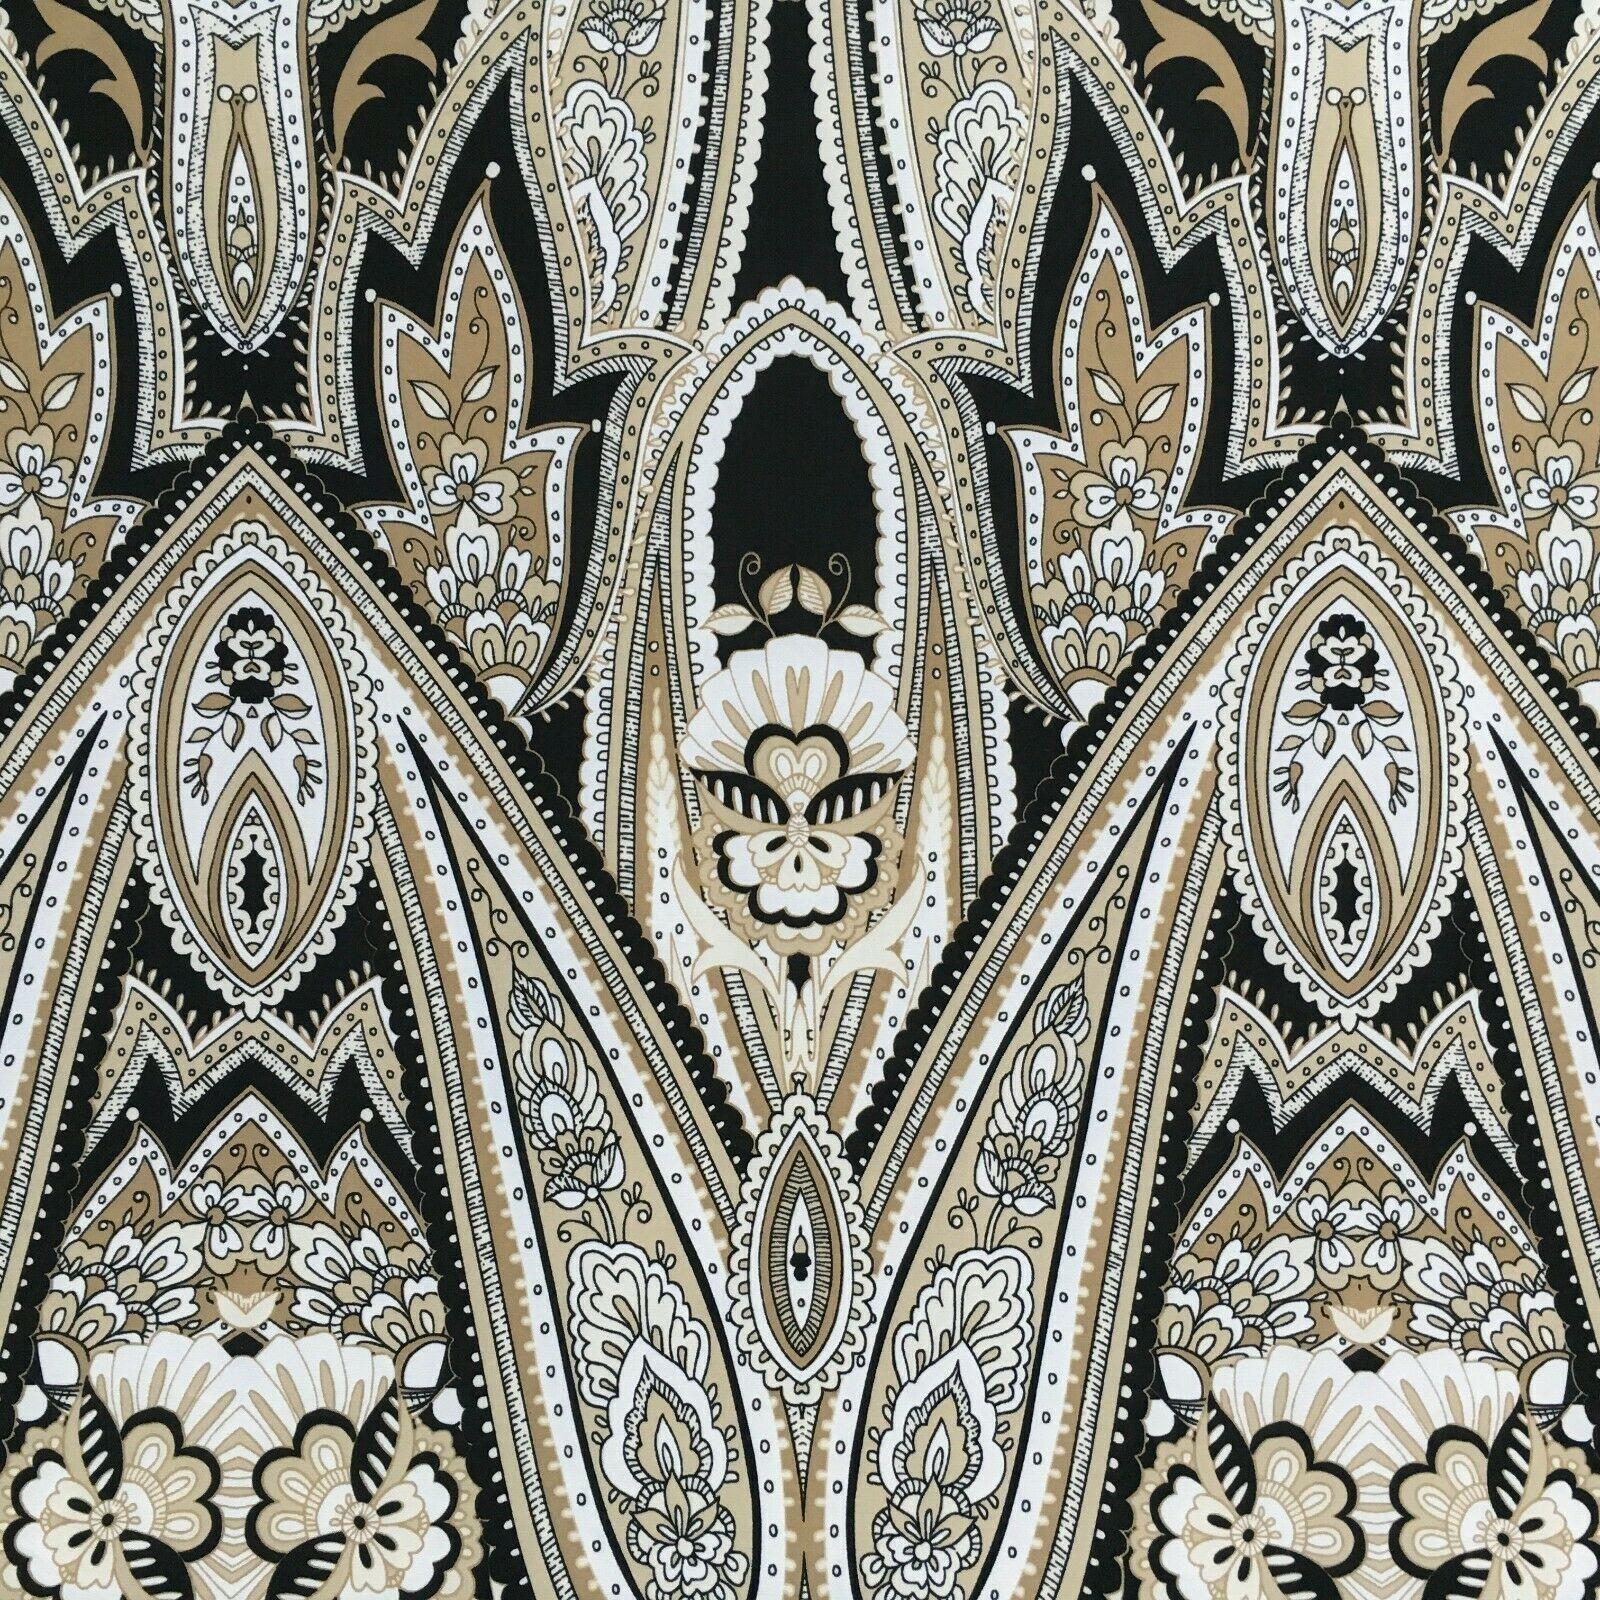 Black beige paisley 80cm panel Stretch Ity Spandex Dress Fabric 147 cm M1220-8